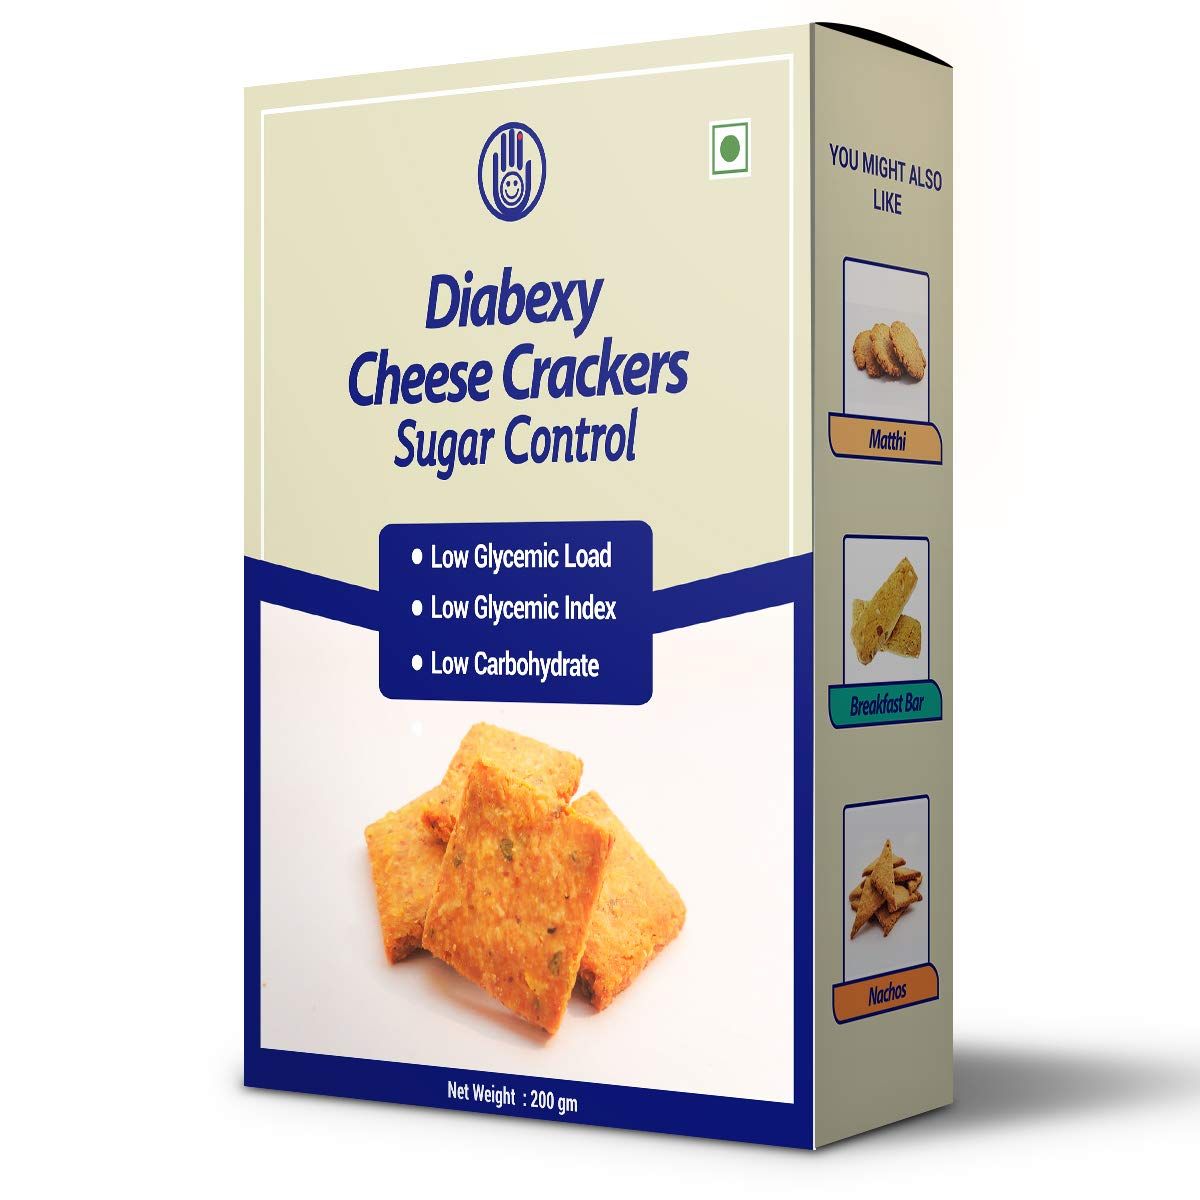 Diabexy Cheese Crackers Image